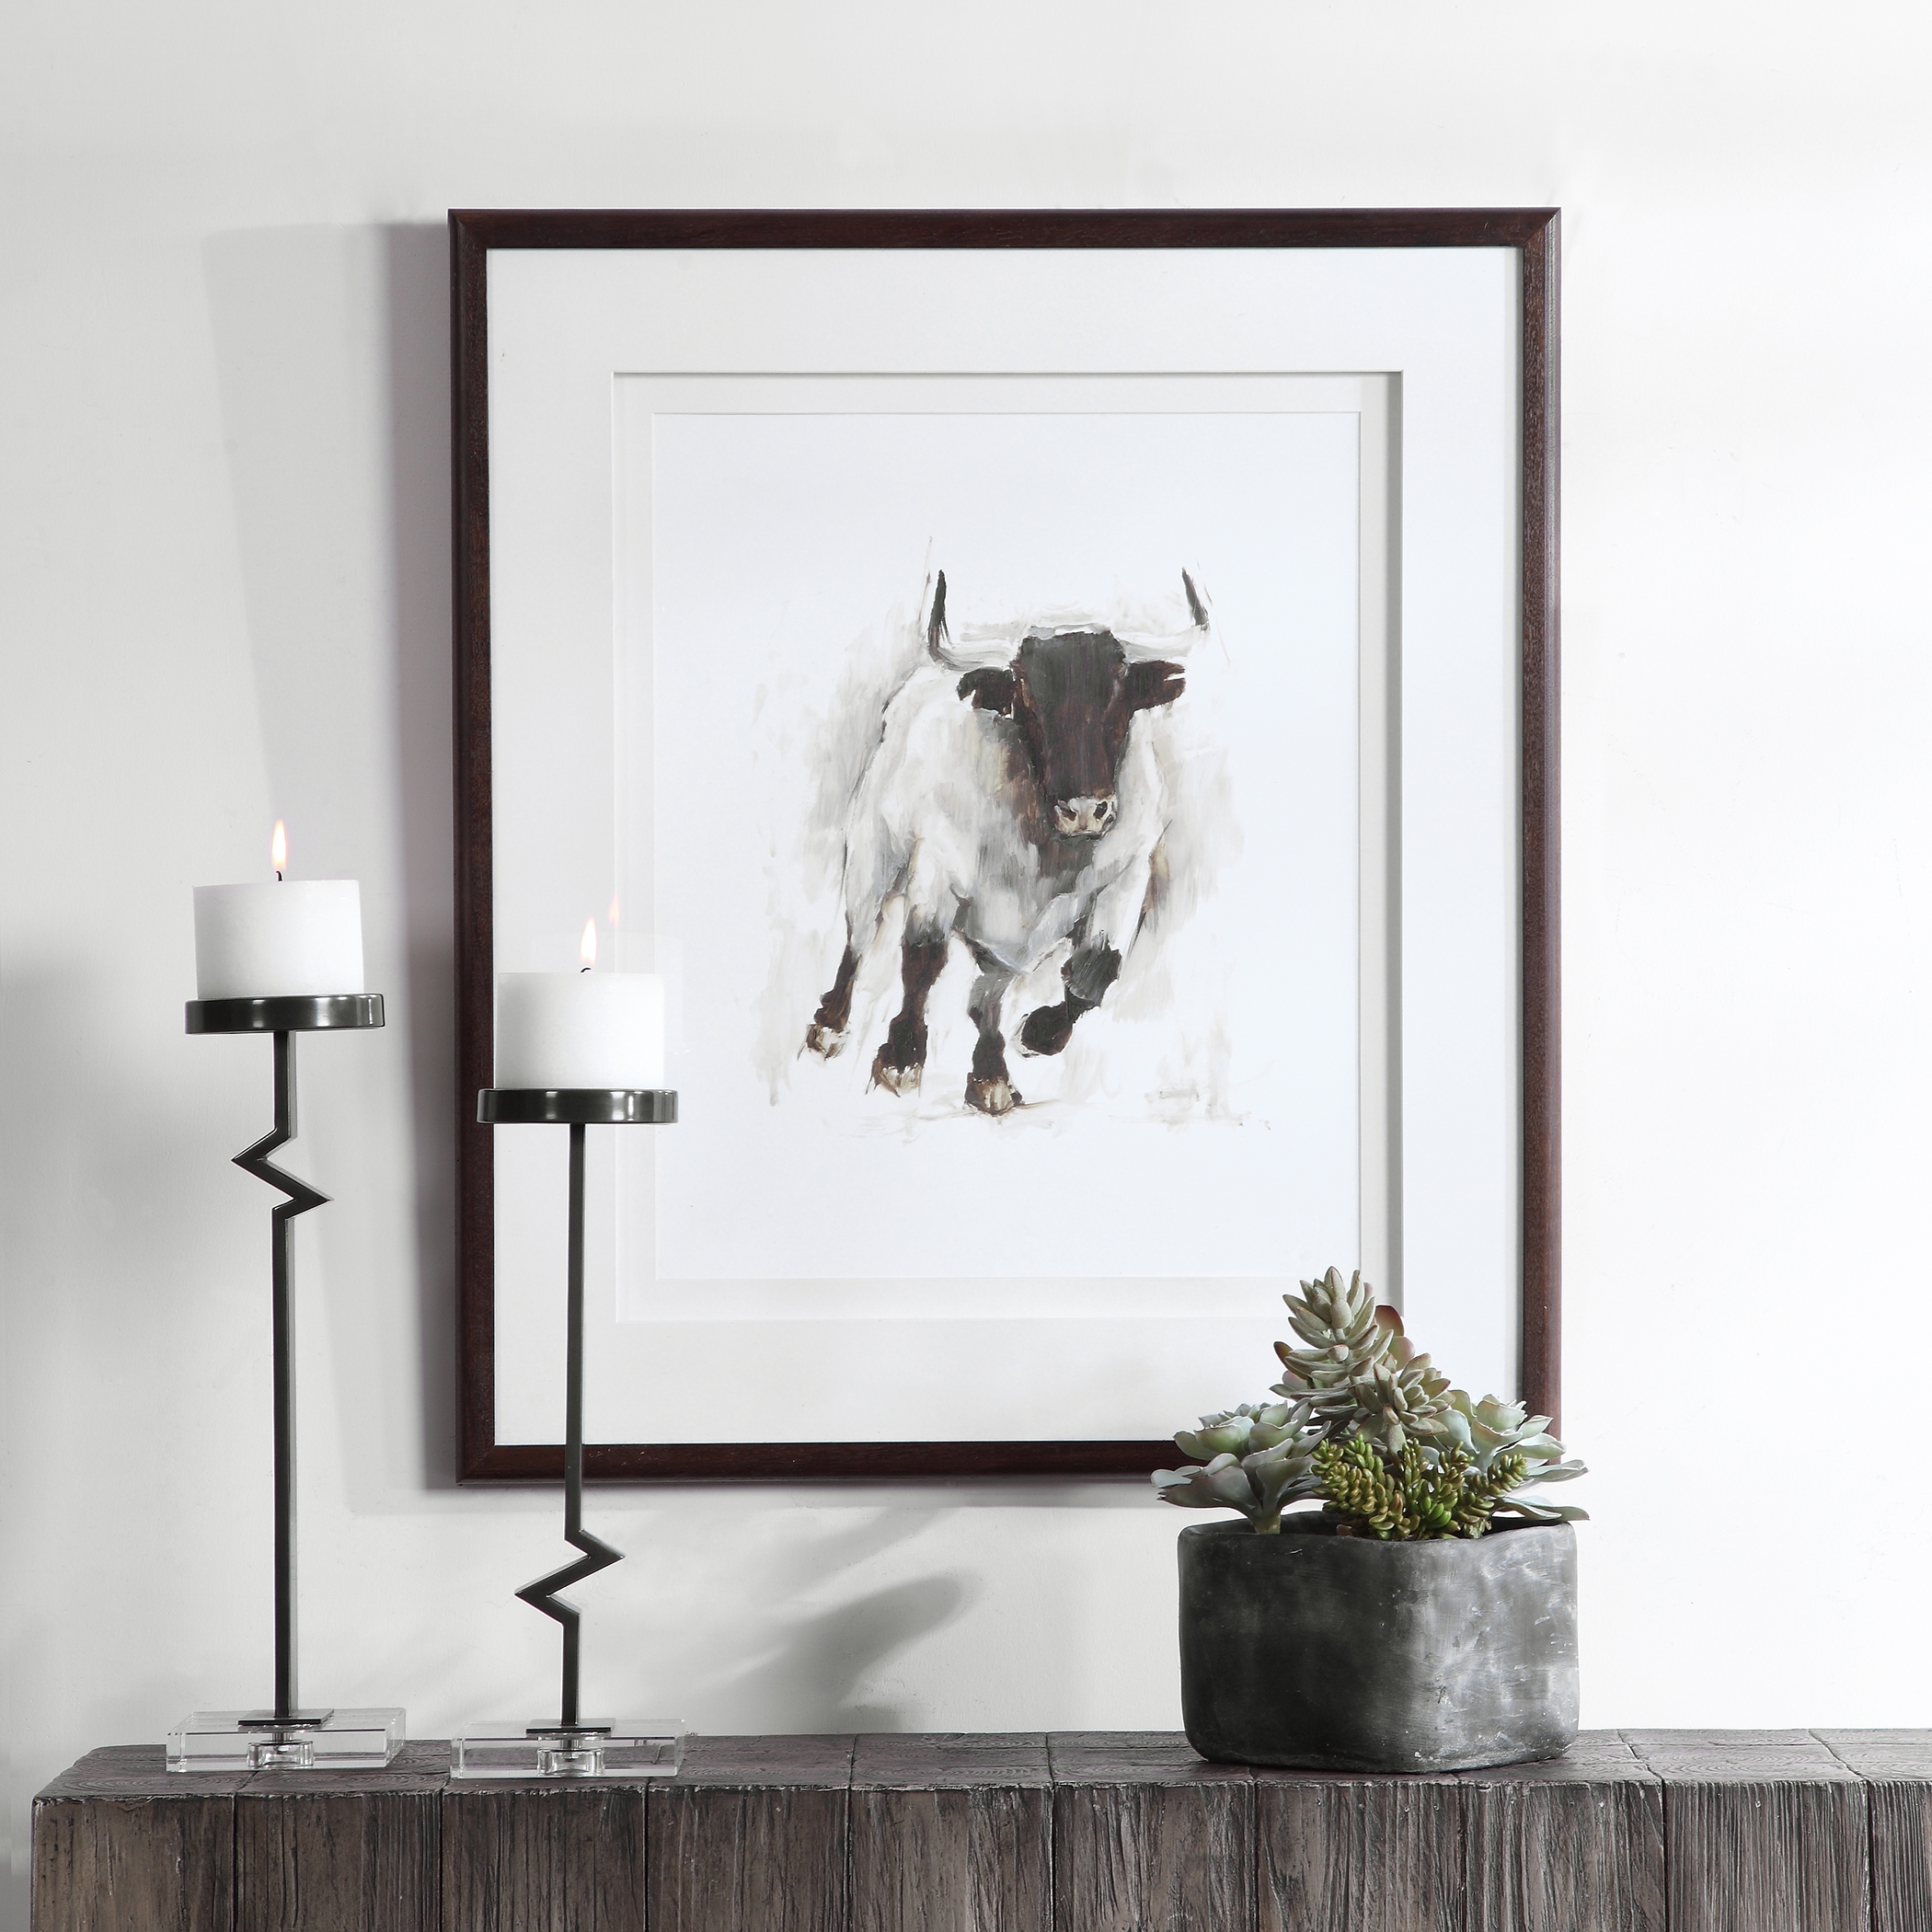 Rustic Bull Framed Animal Print - Image 0